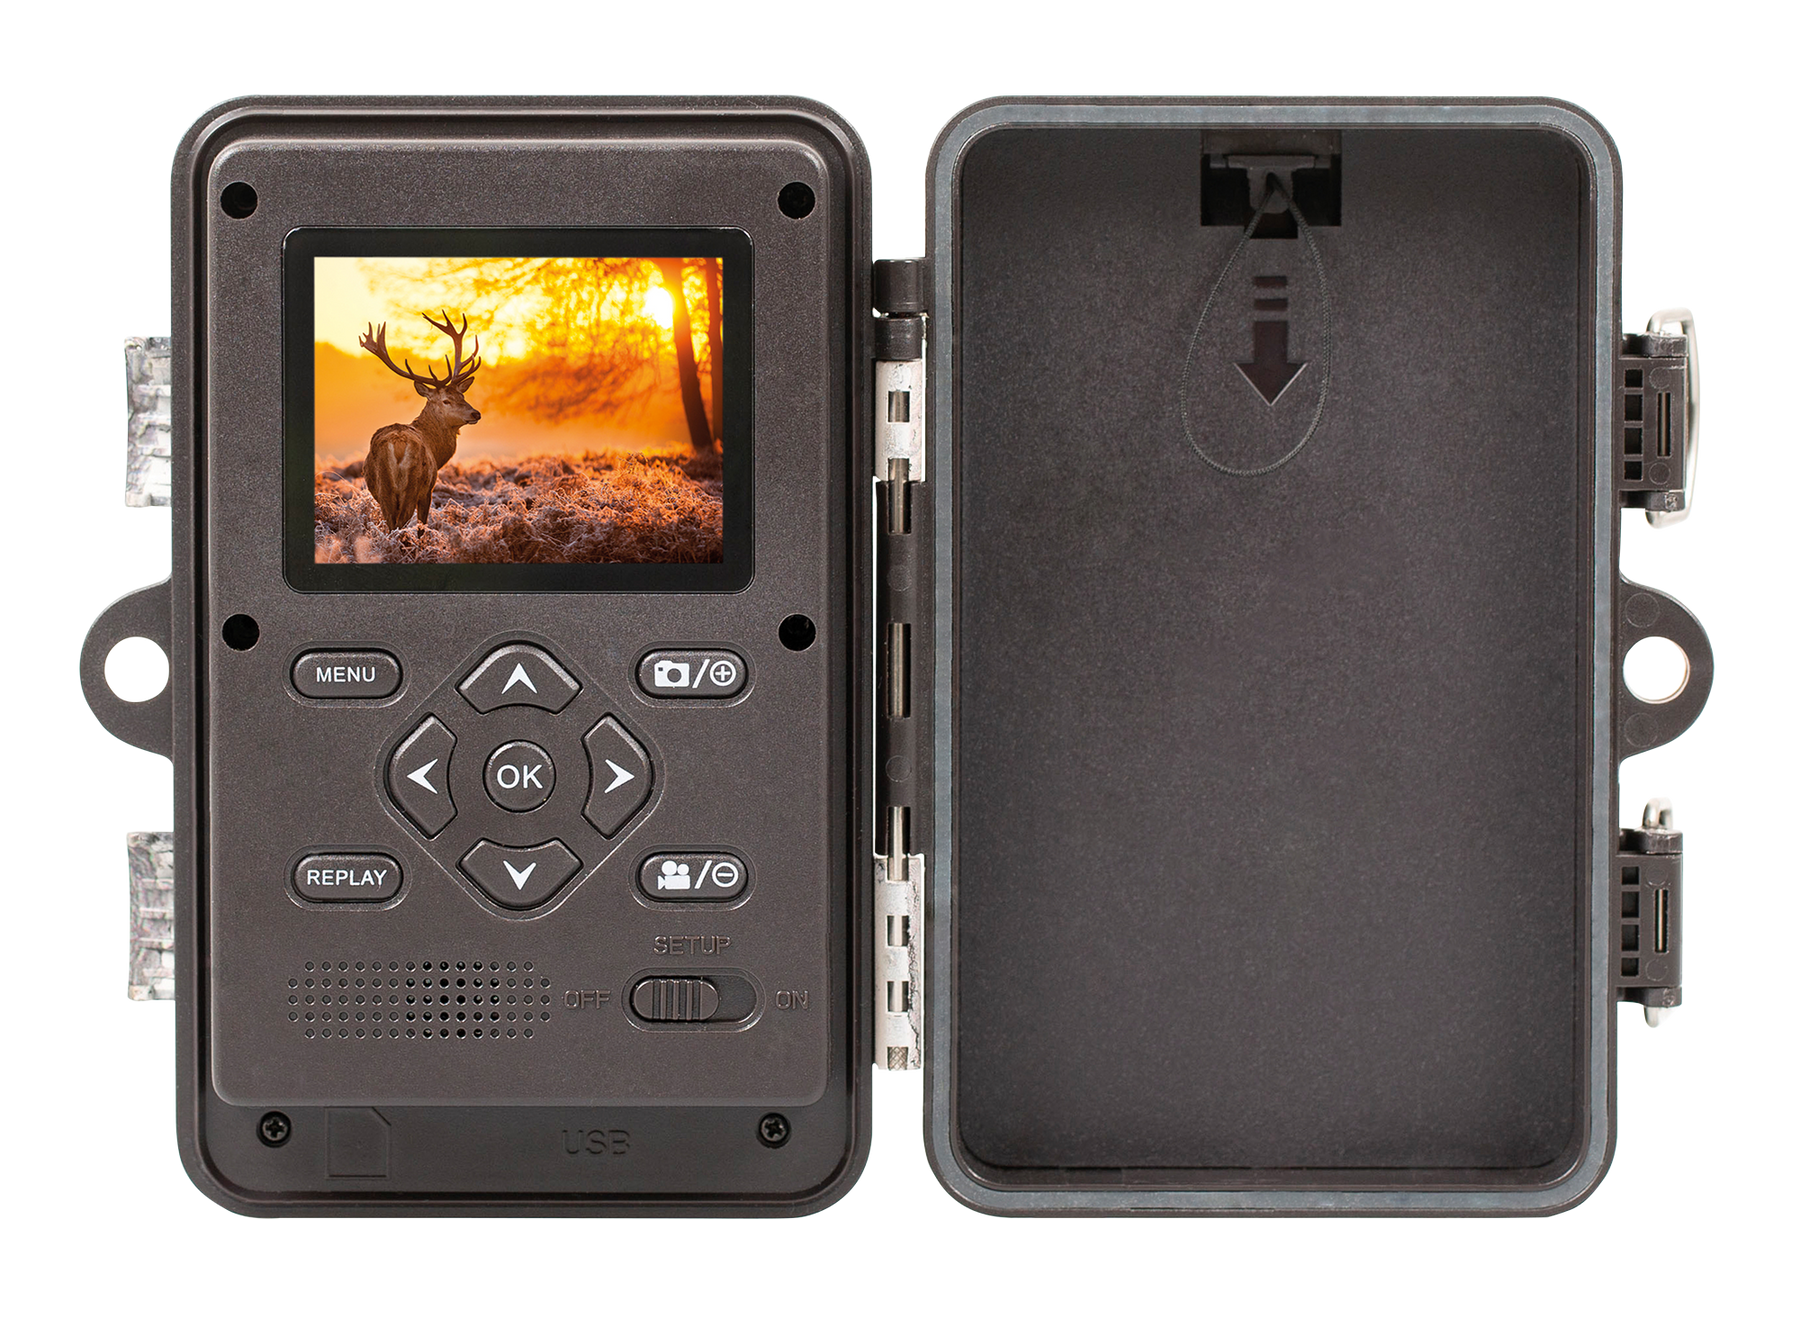 B-stock:wildlife camera wk-4hdw